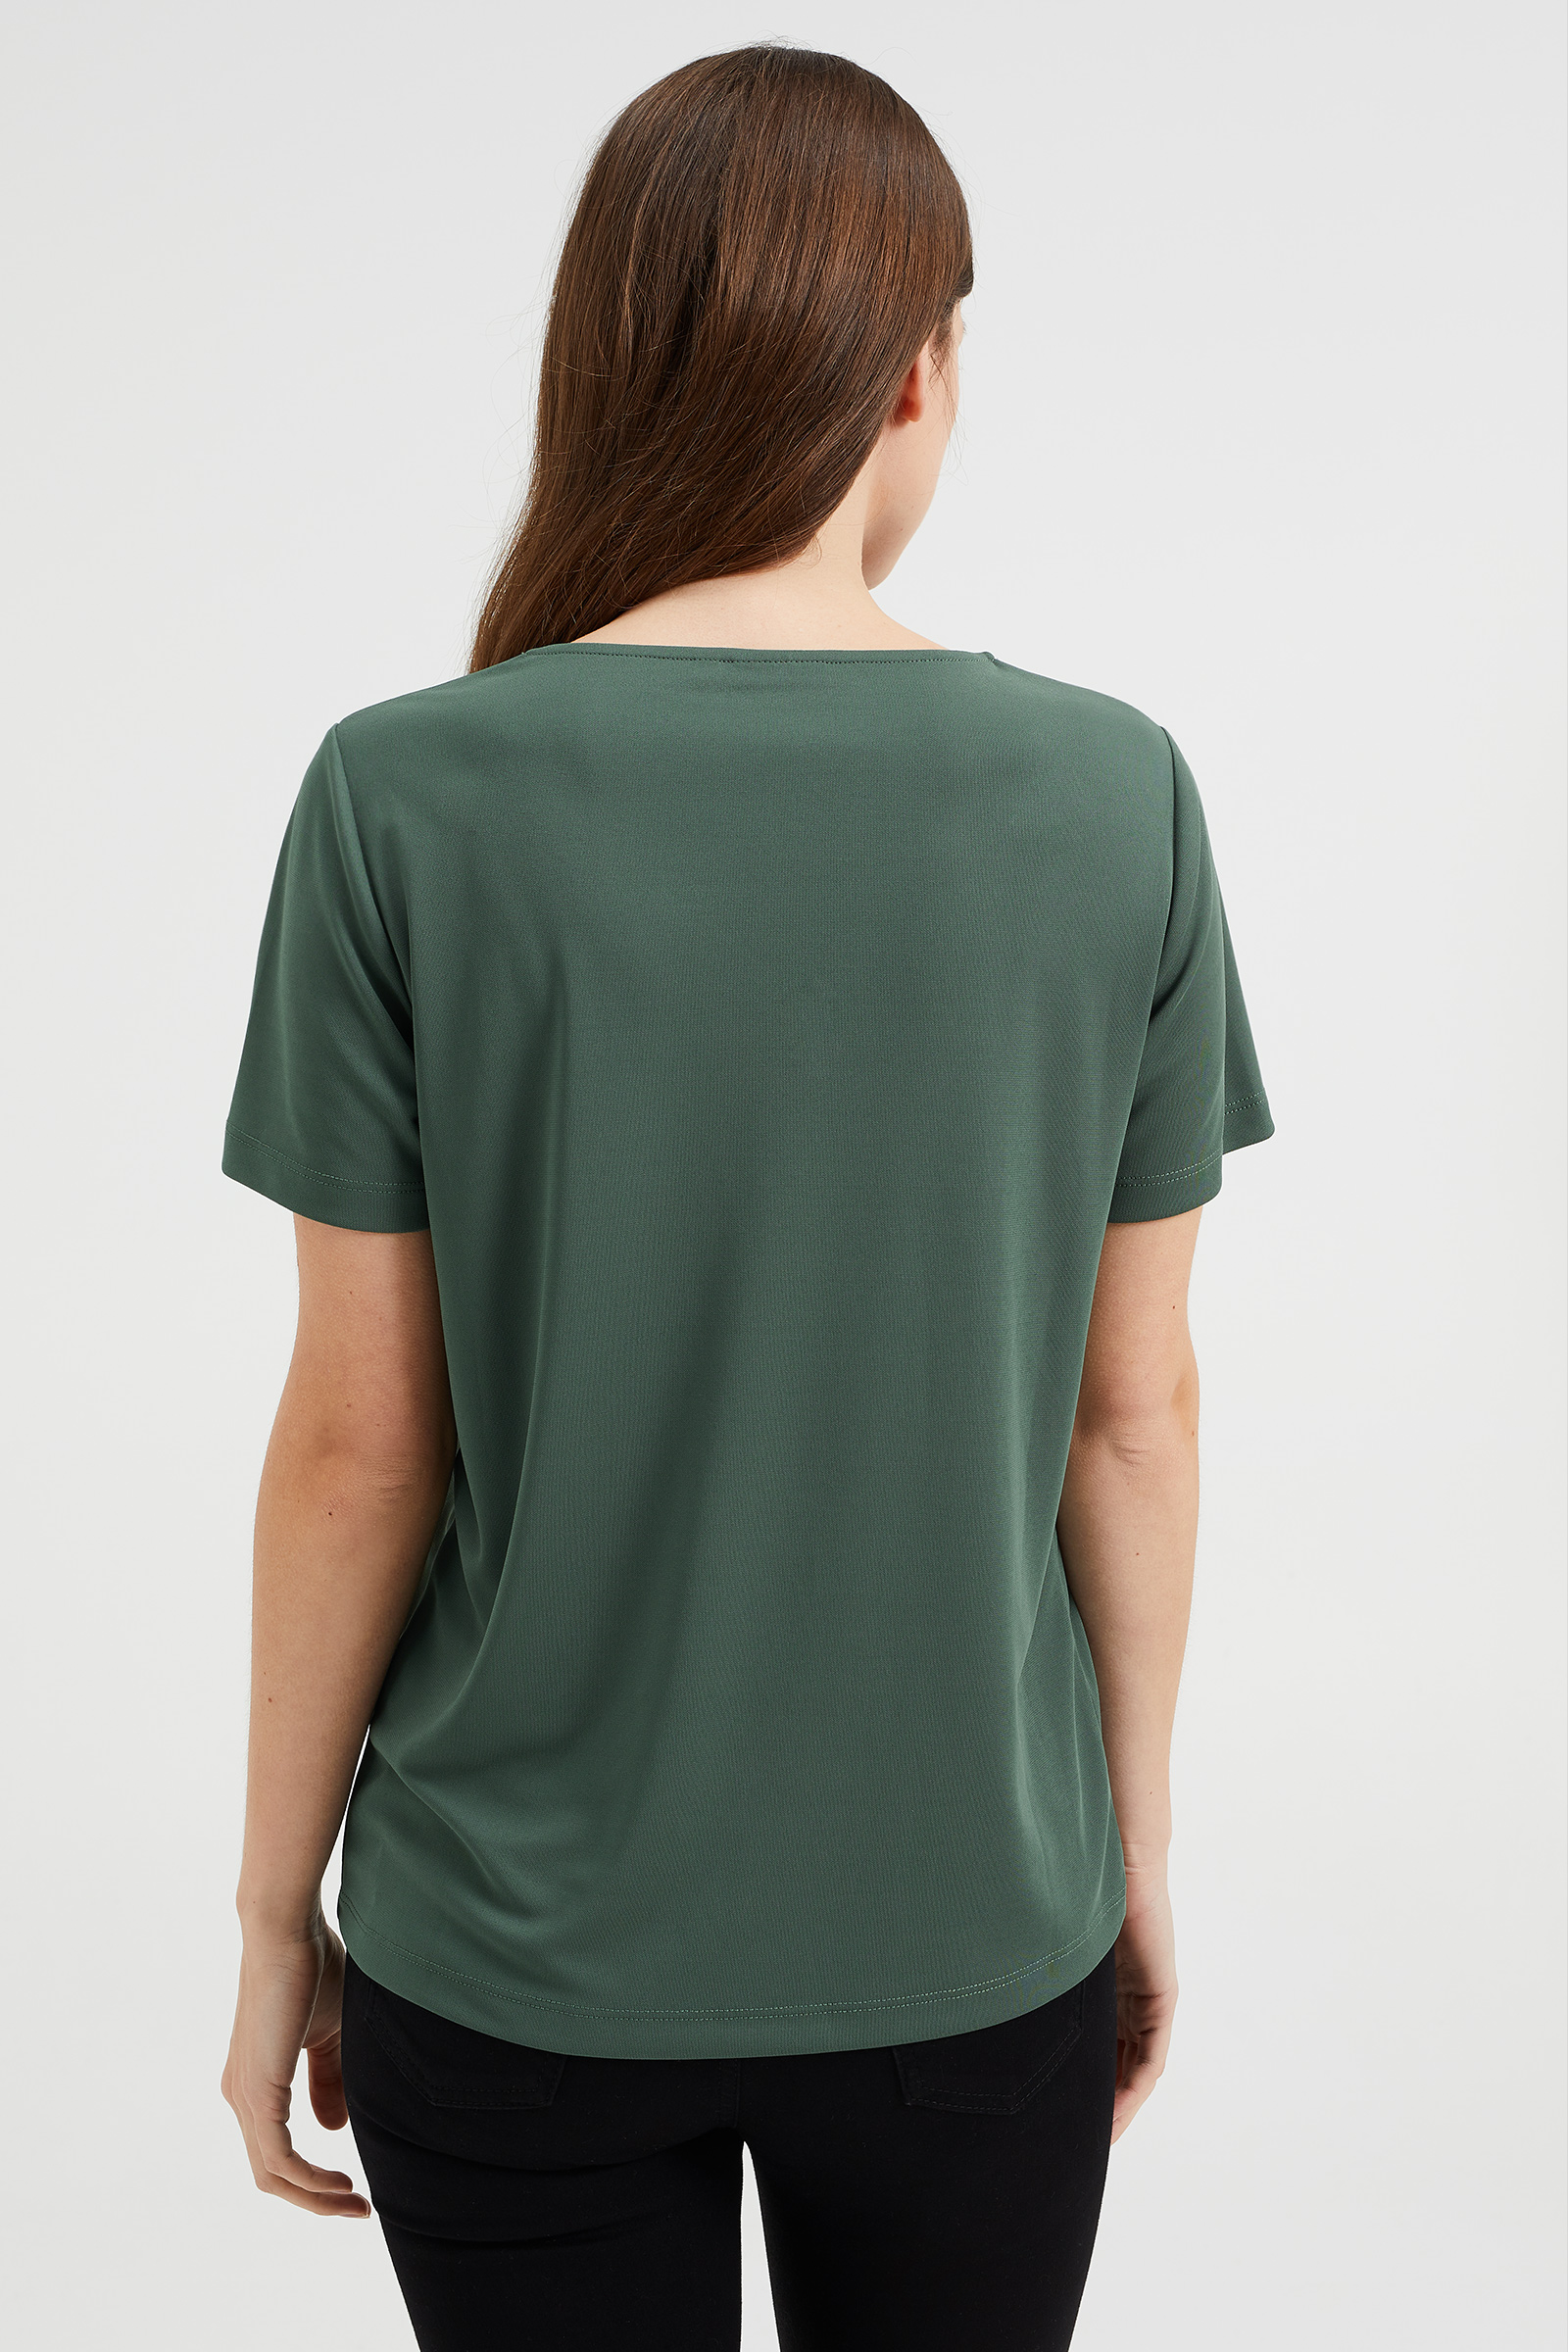 DAMEN Hemden & T-Shirts Elegant Zendra T-Shirt Grün 44 Rabatt 56 % 